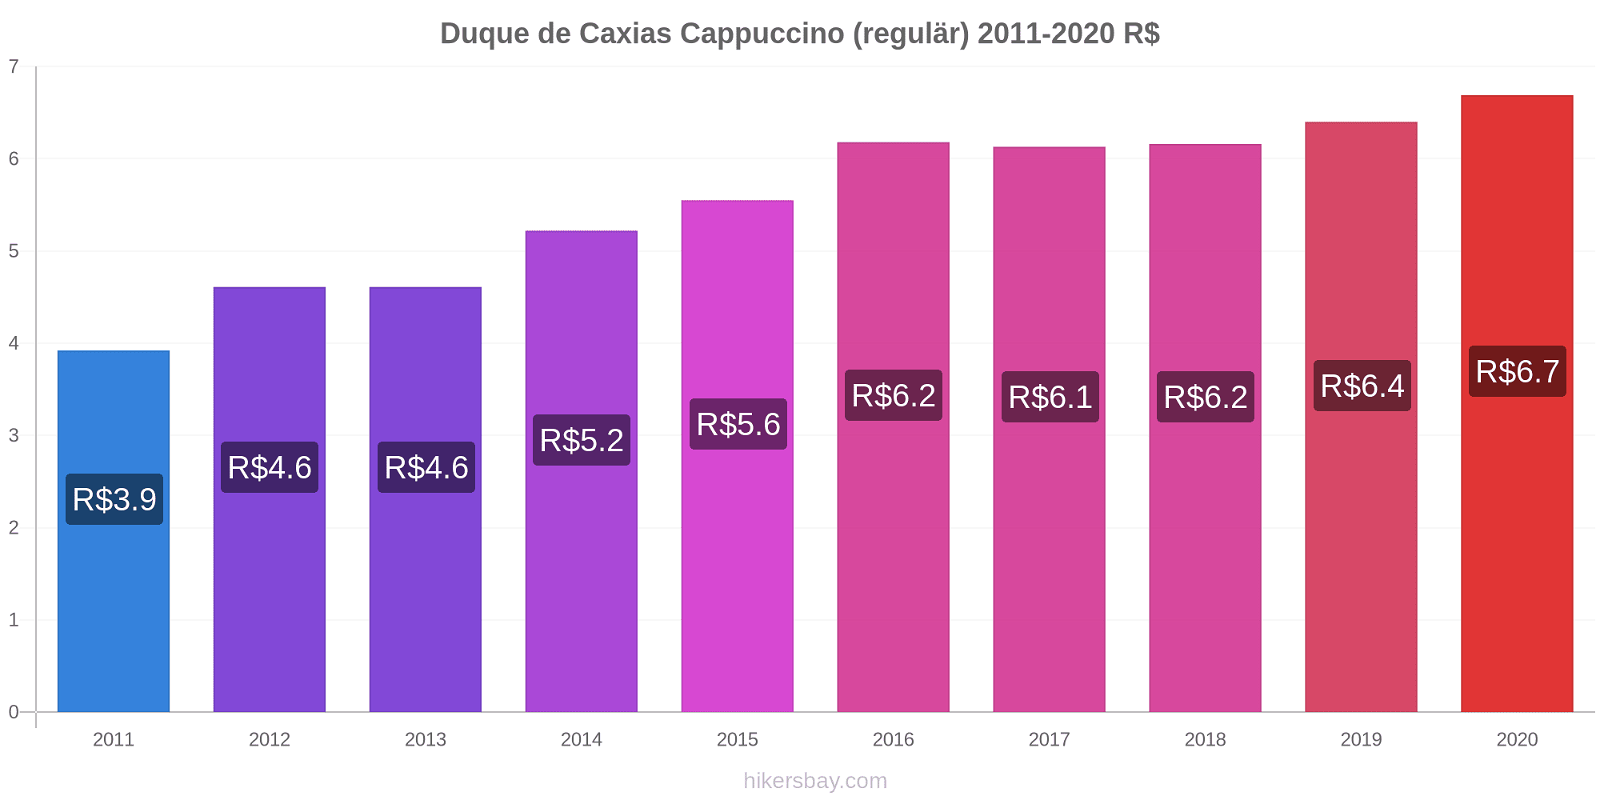 Duque de Caxias Preisänderungen Cappuccino (regulär) hikersbay.com